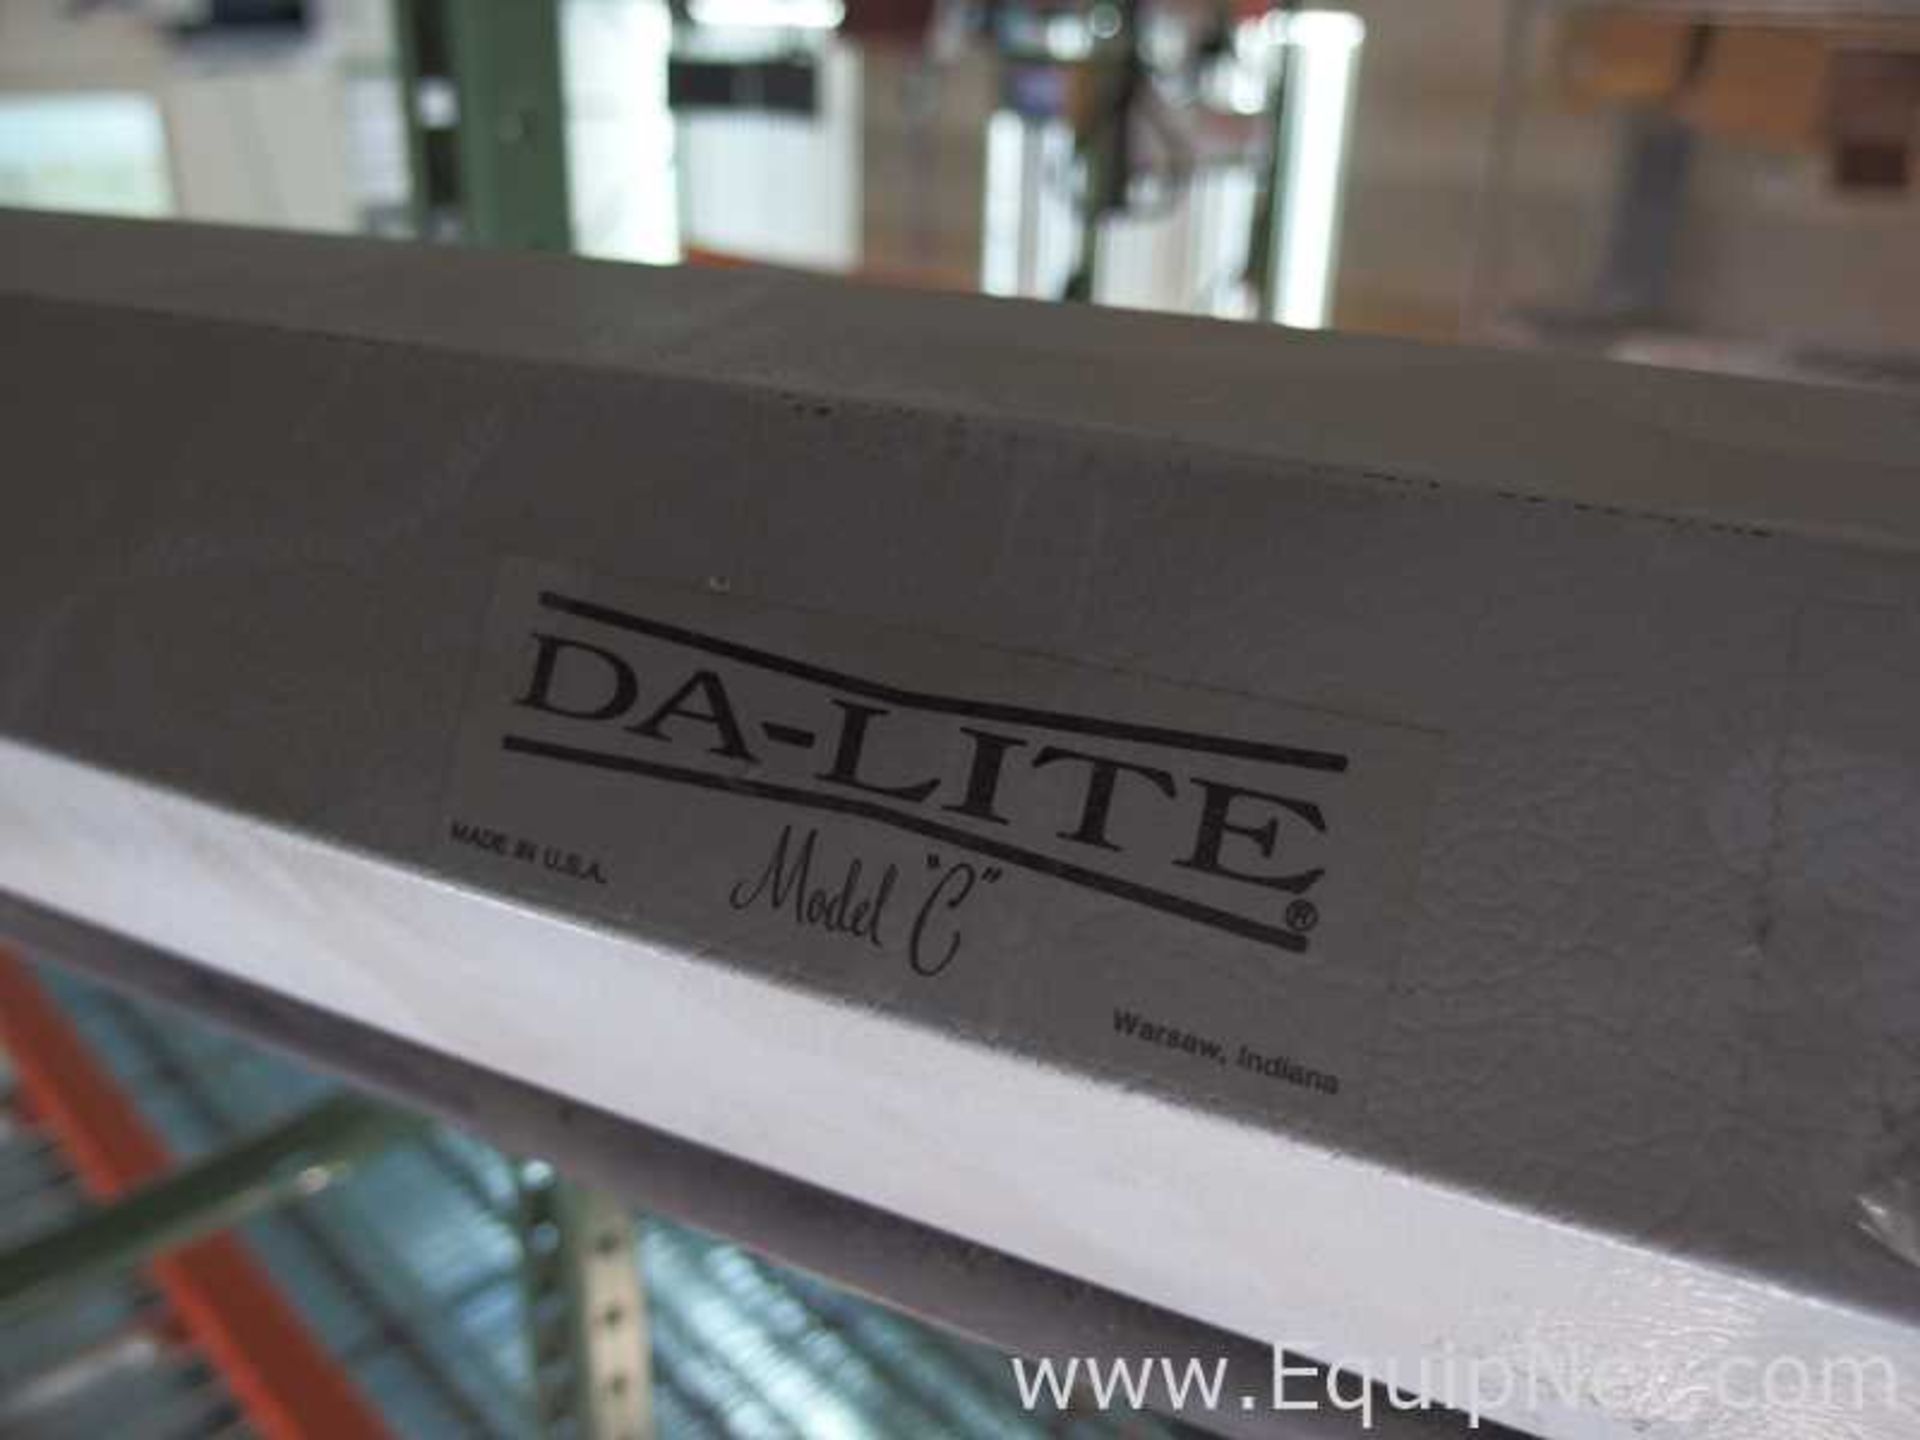 Da-Lite Model C 12 Foot Projector Screen - Image 4 of 4